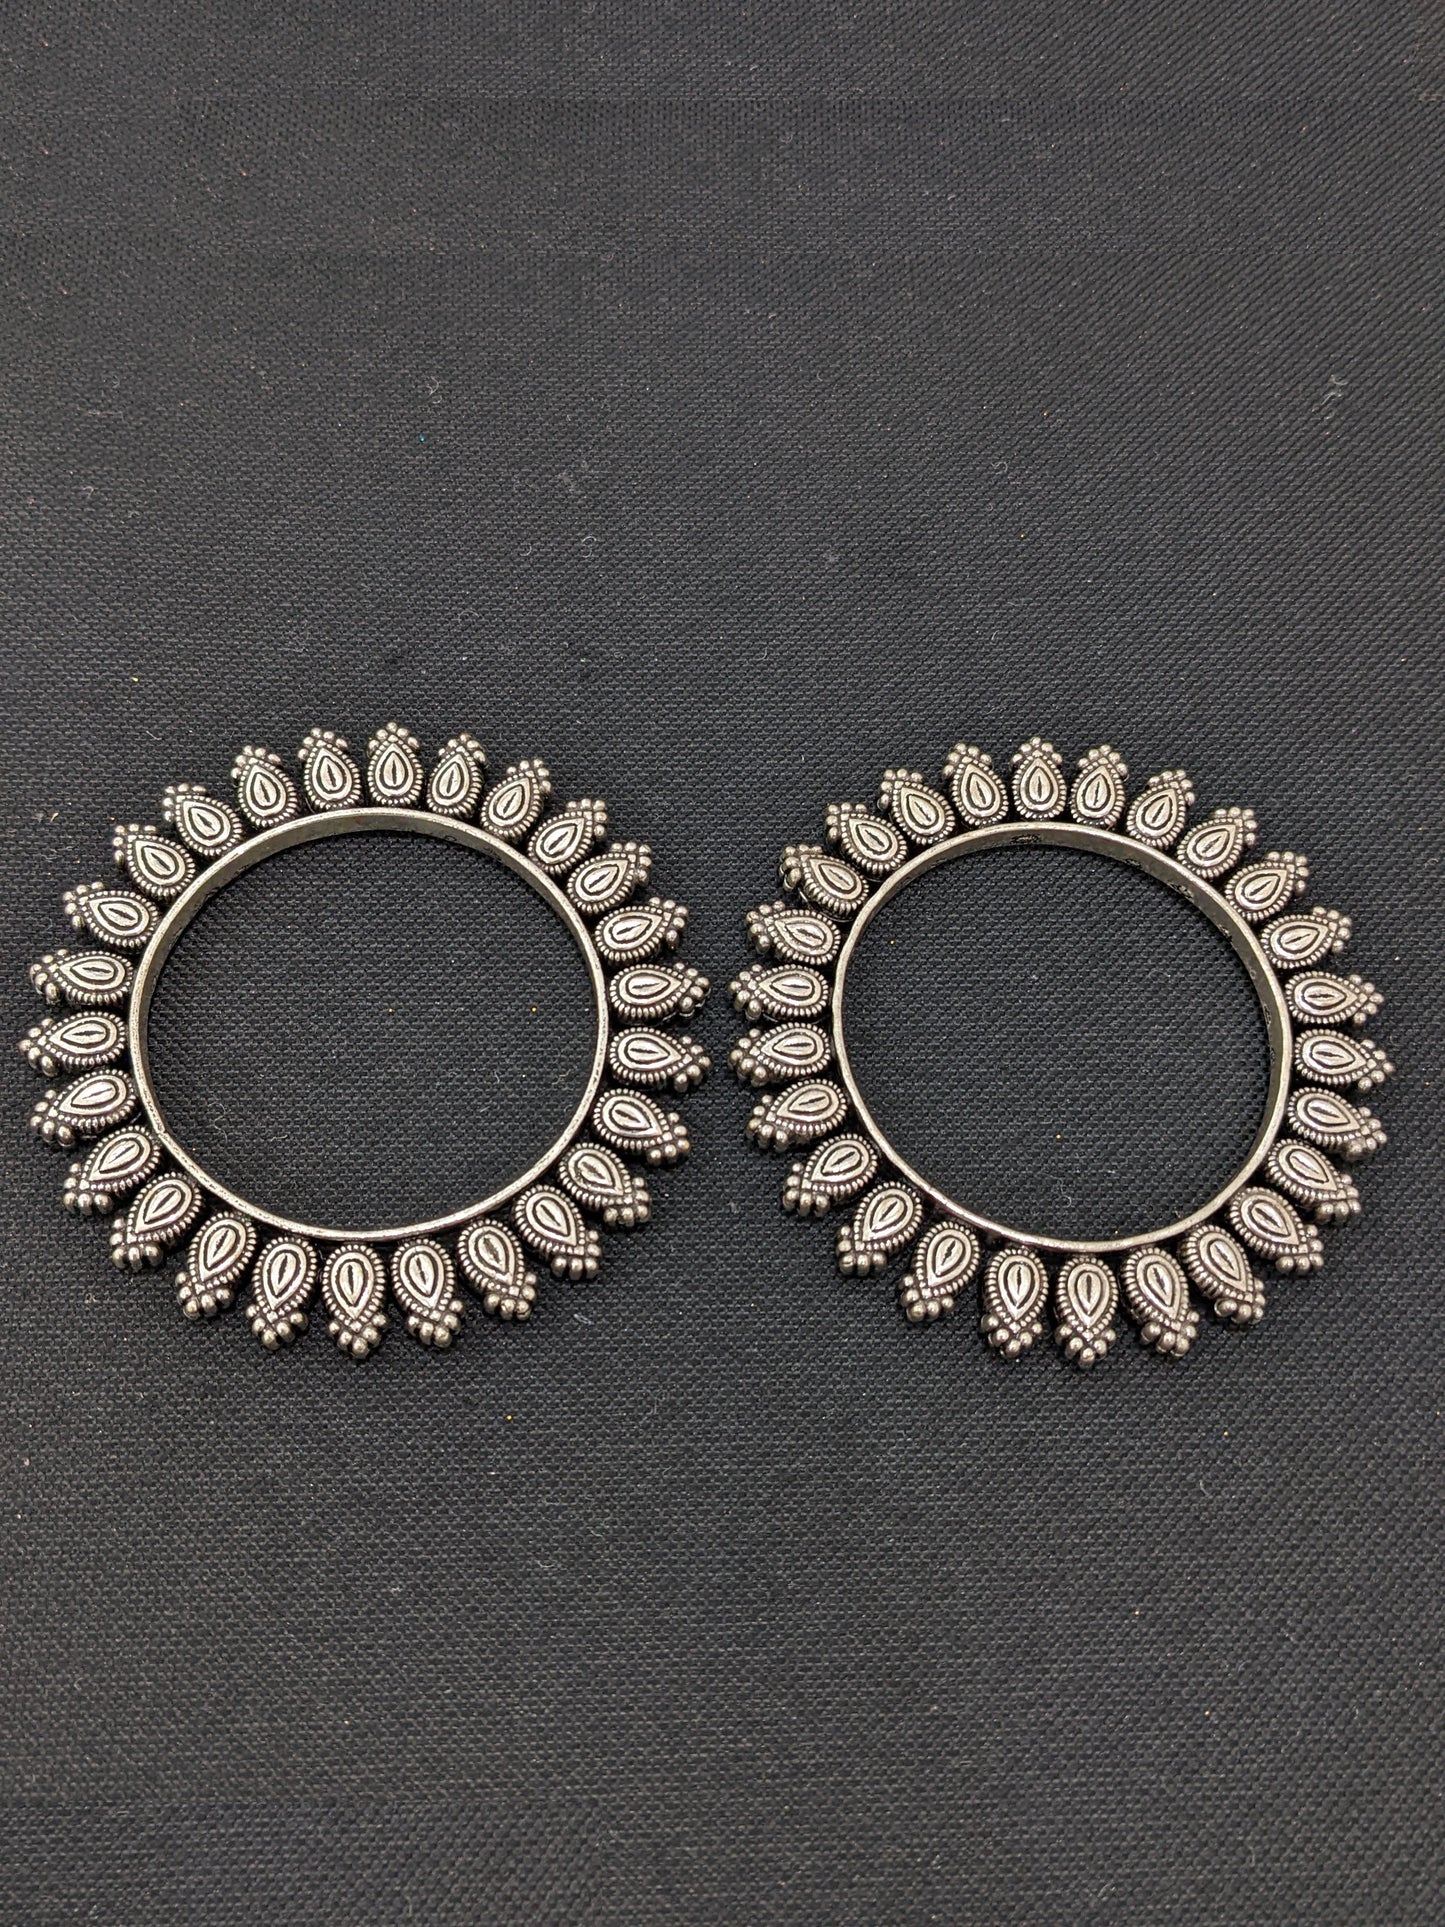 Oxidized silver pair bangles - Teardrop design